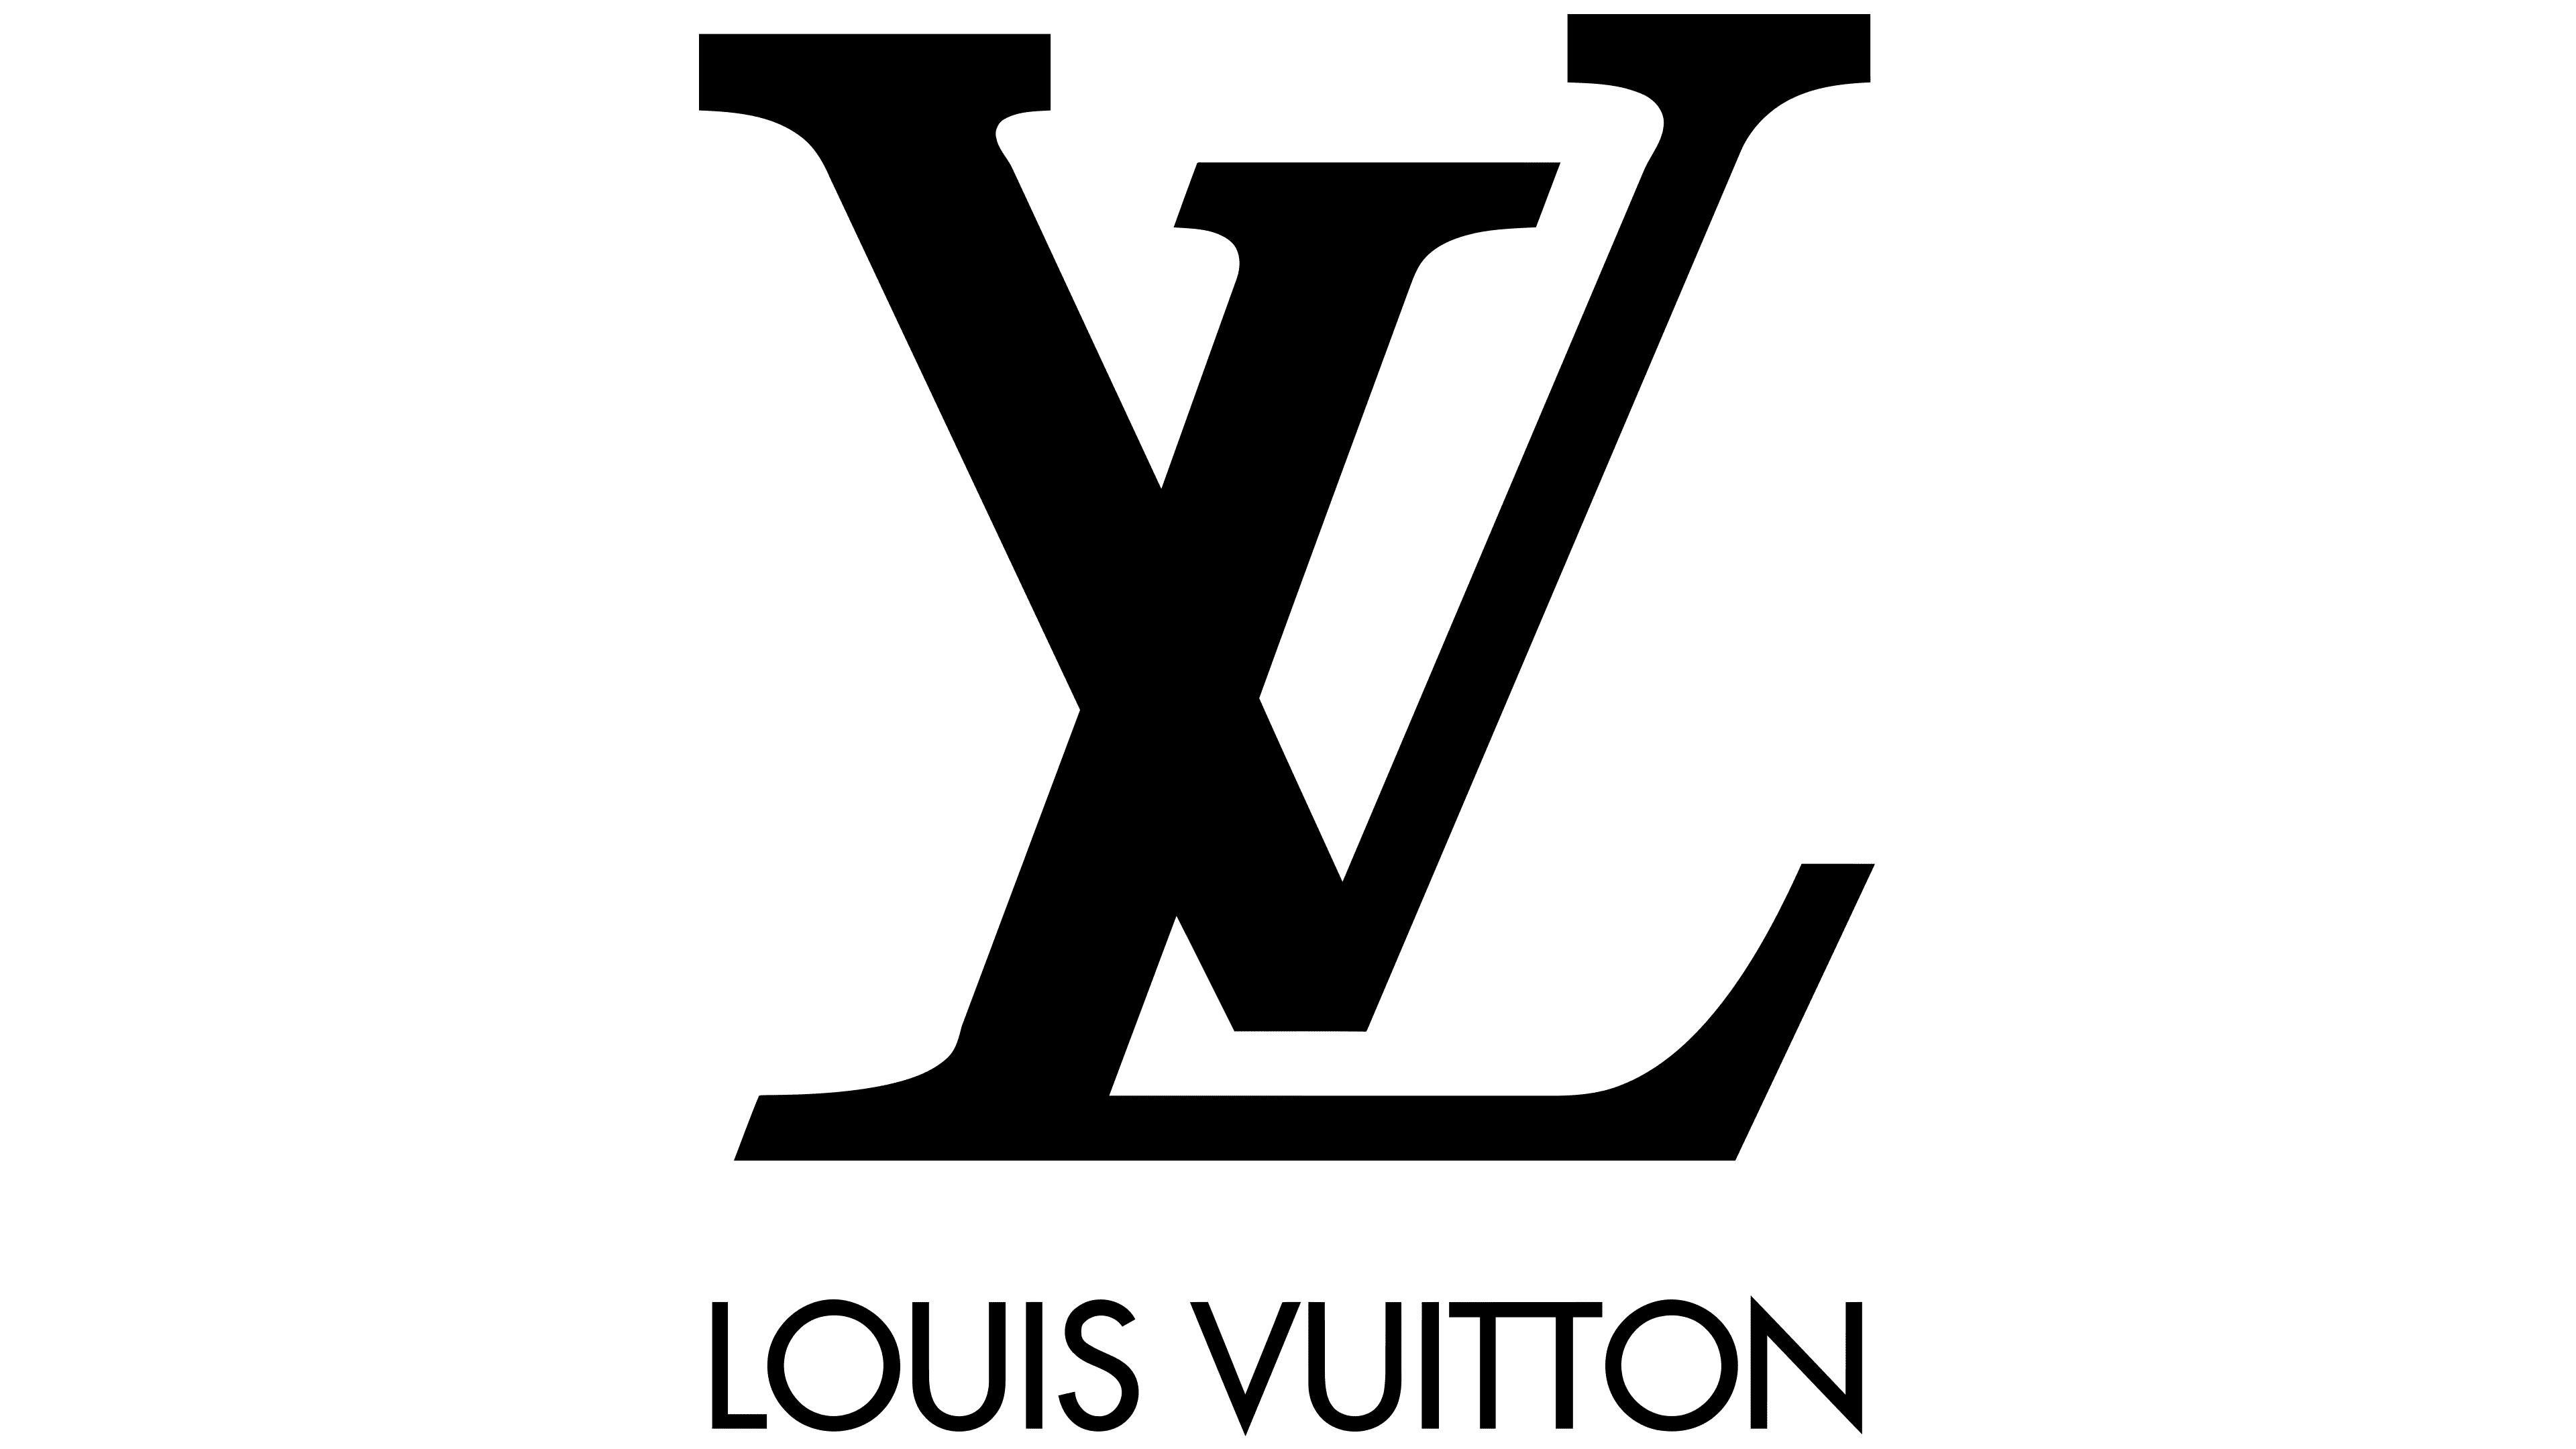 LOUIS VUITTON   Louis vuitton iphone wallpaper Iphone wallpaper Louis  vuitton